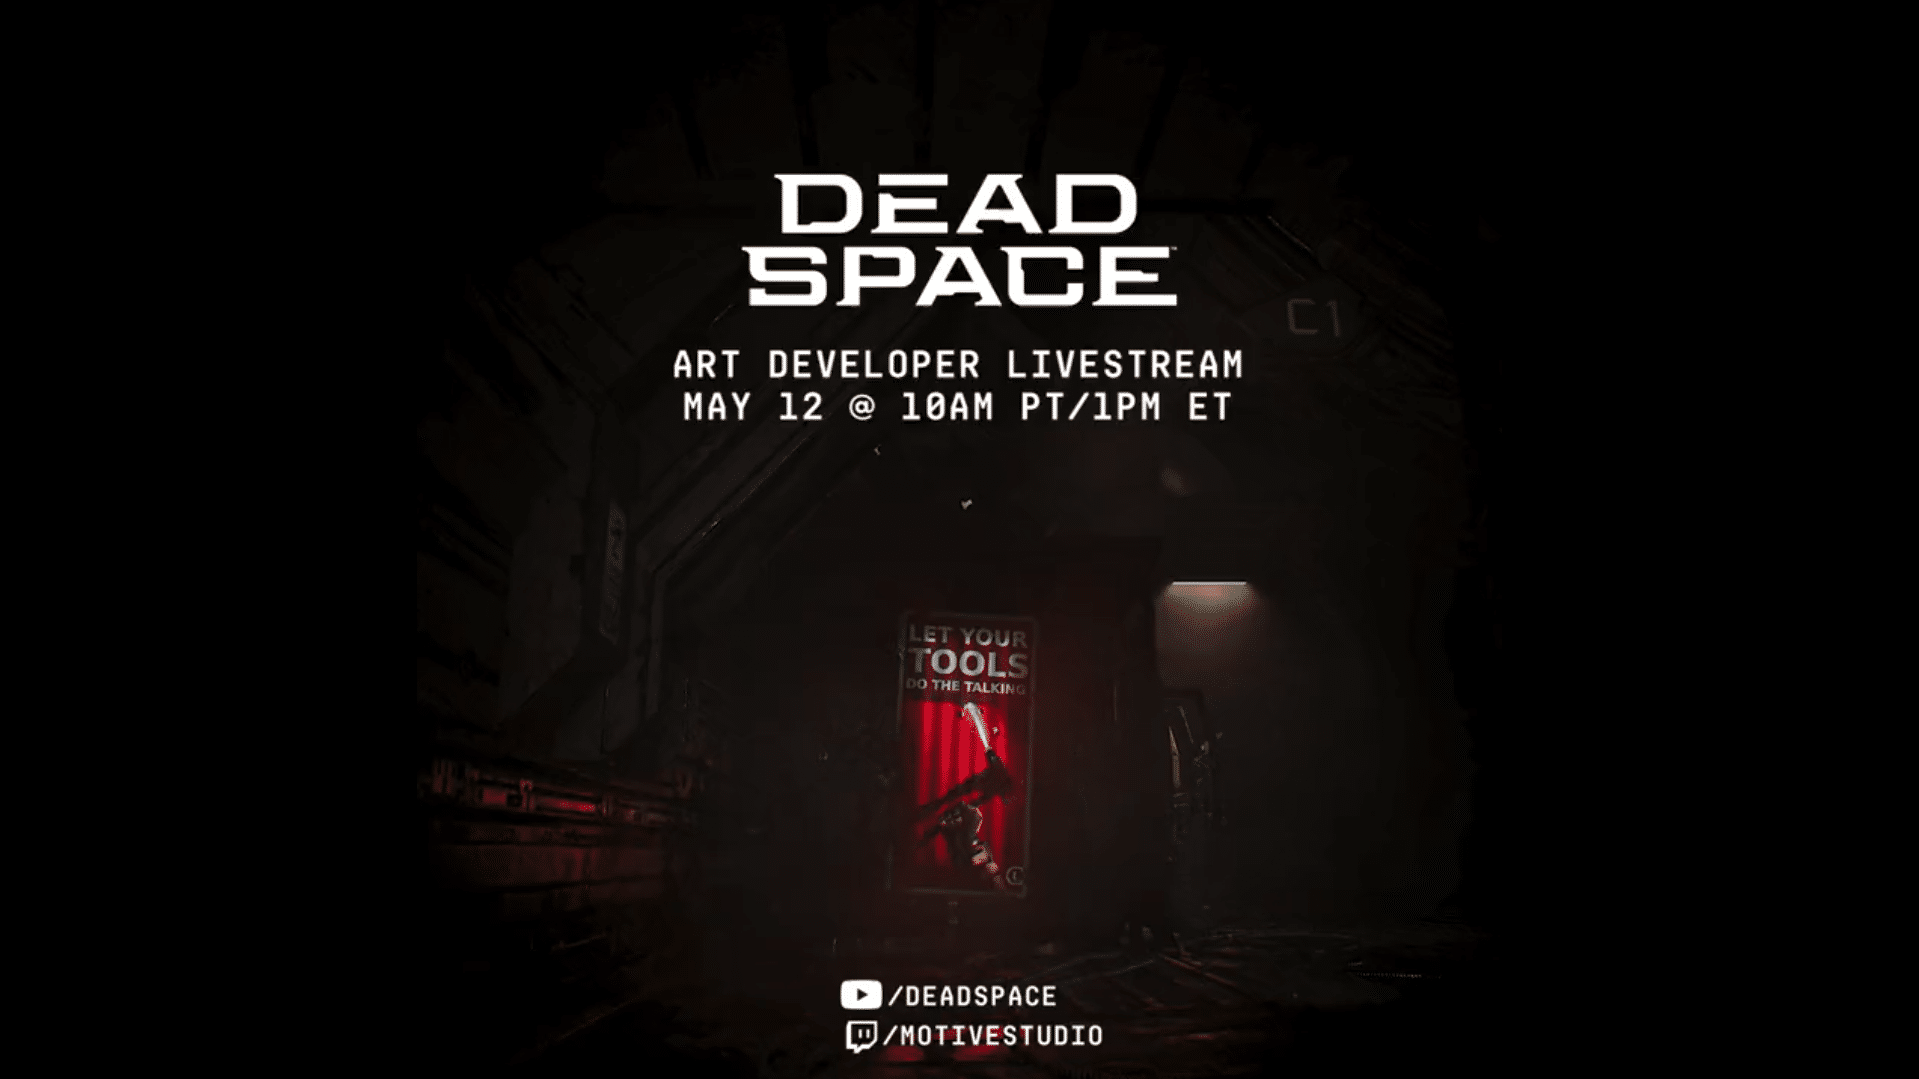 Dead Space Remake Developer Livestream